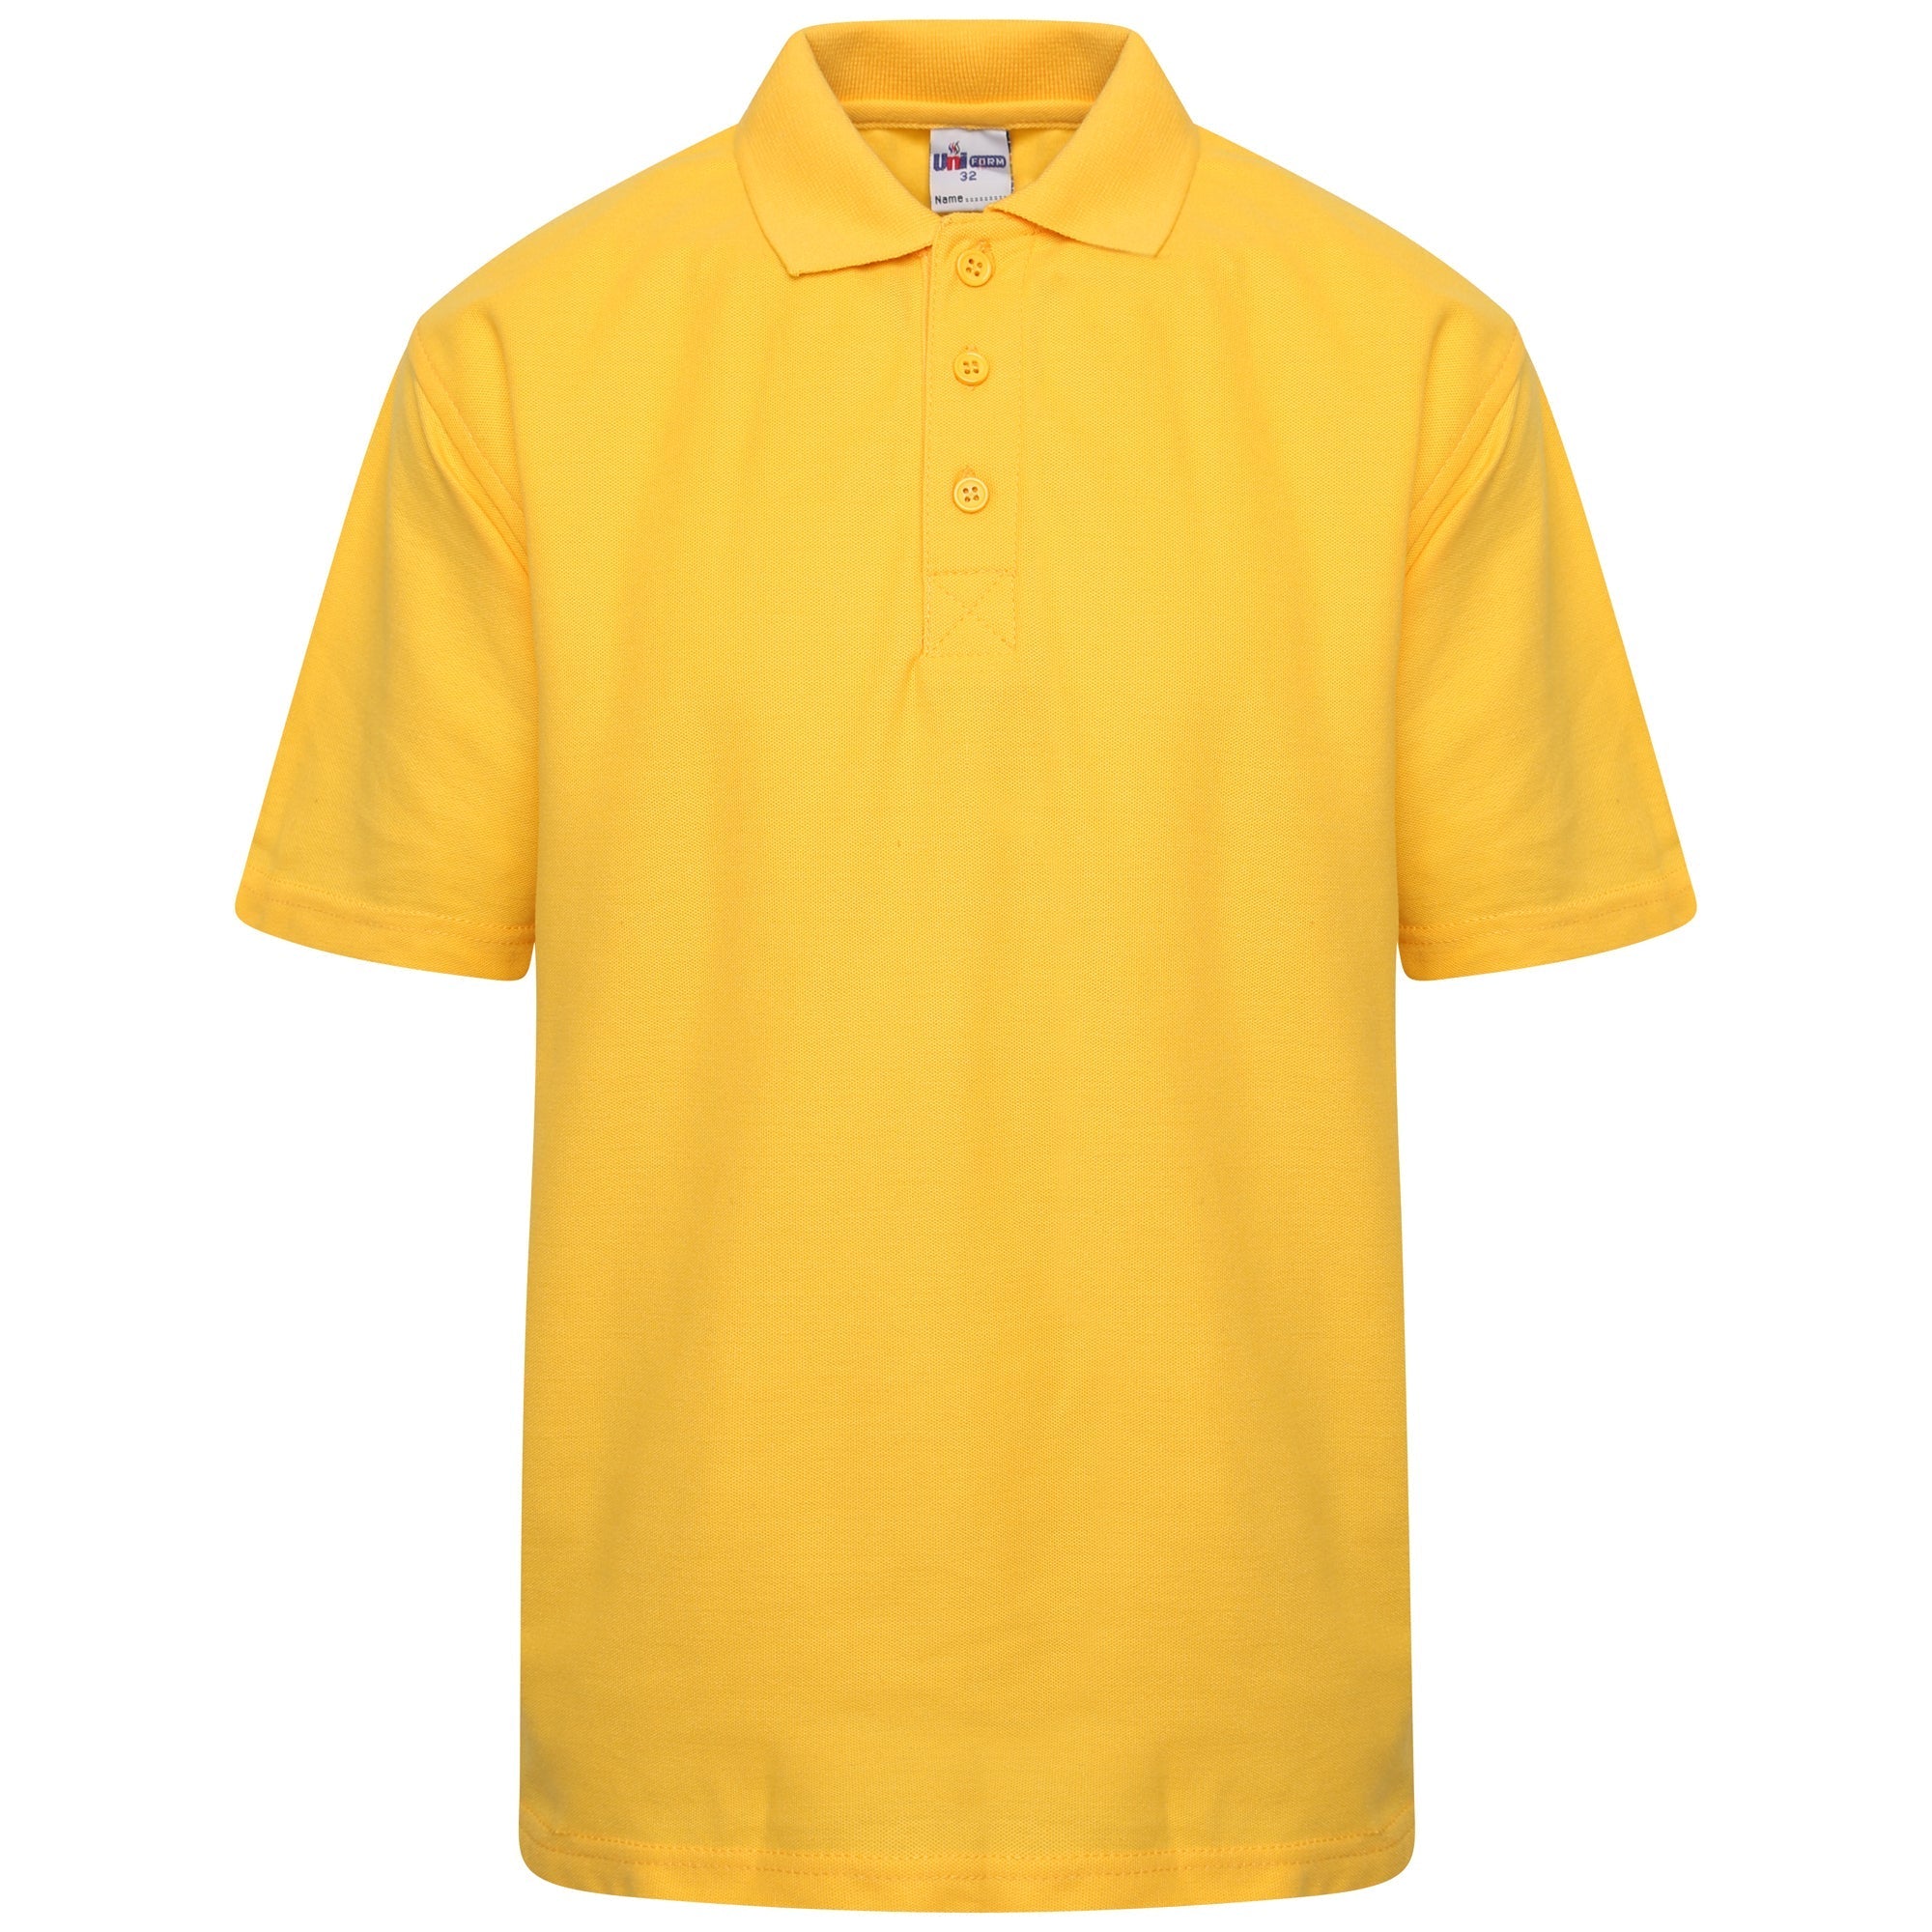 Yellow Polo T Shirts Plain Kids School Uniform  T Shirt Boys Girls Tee Top Sports